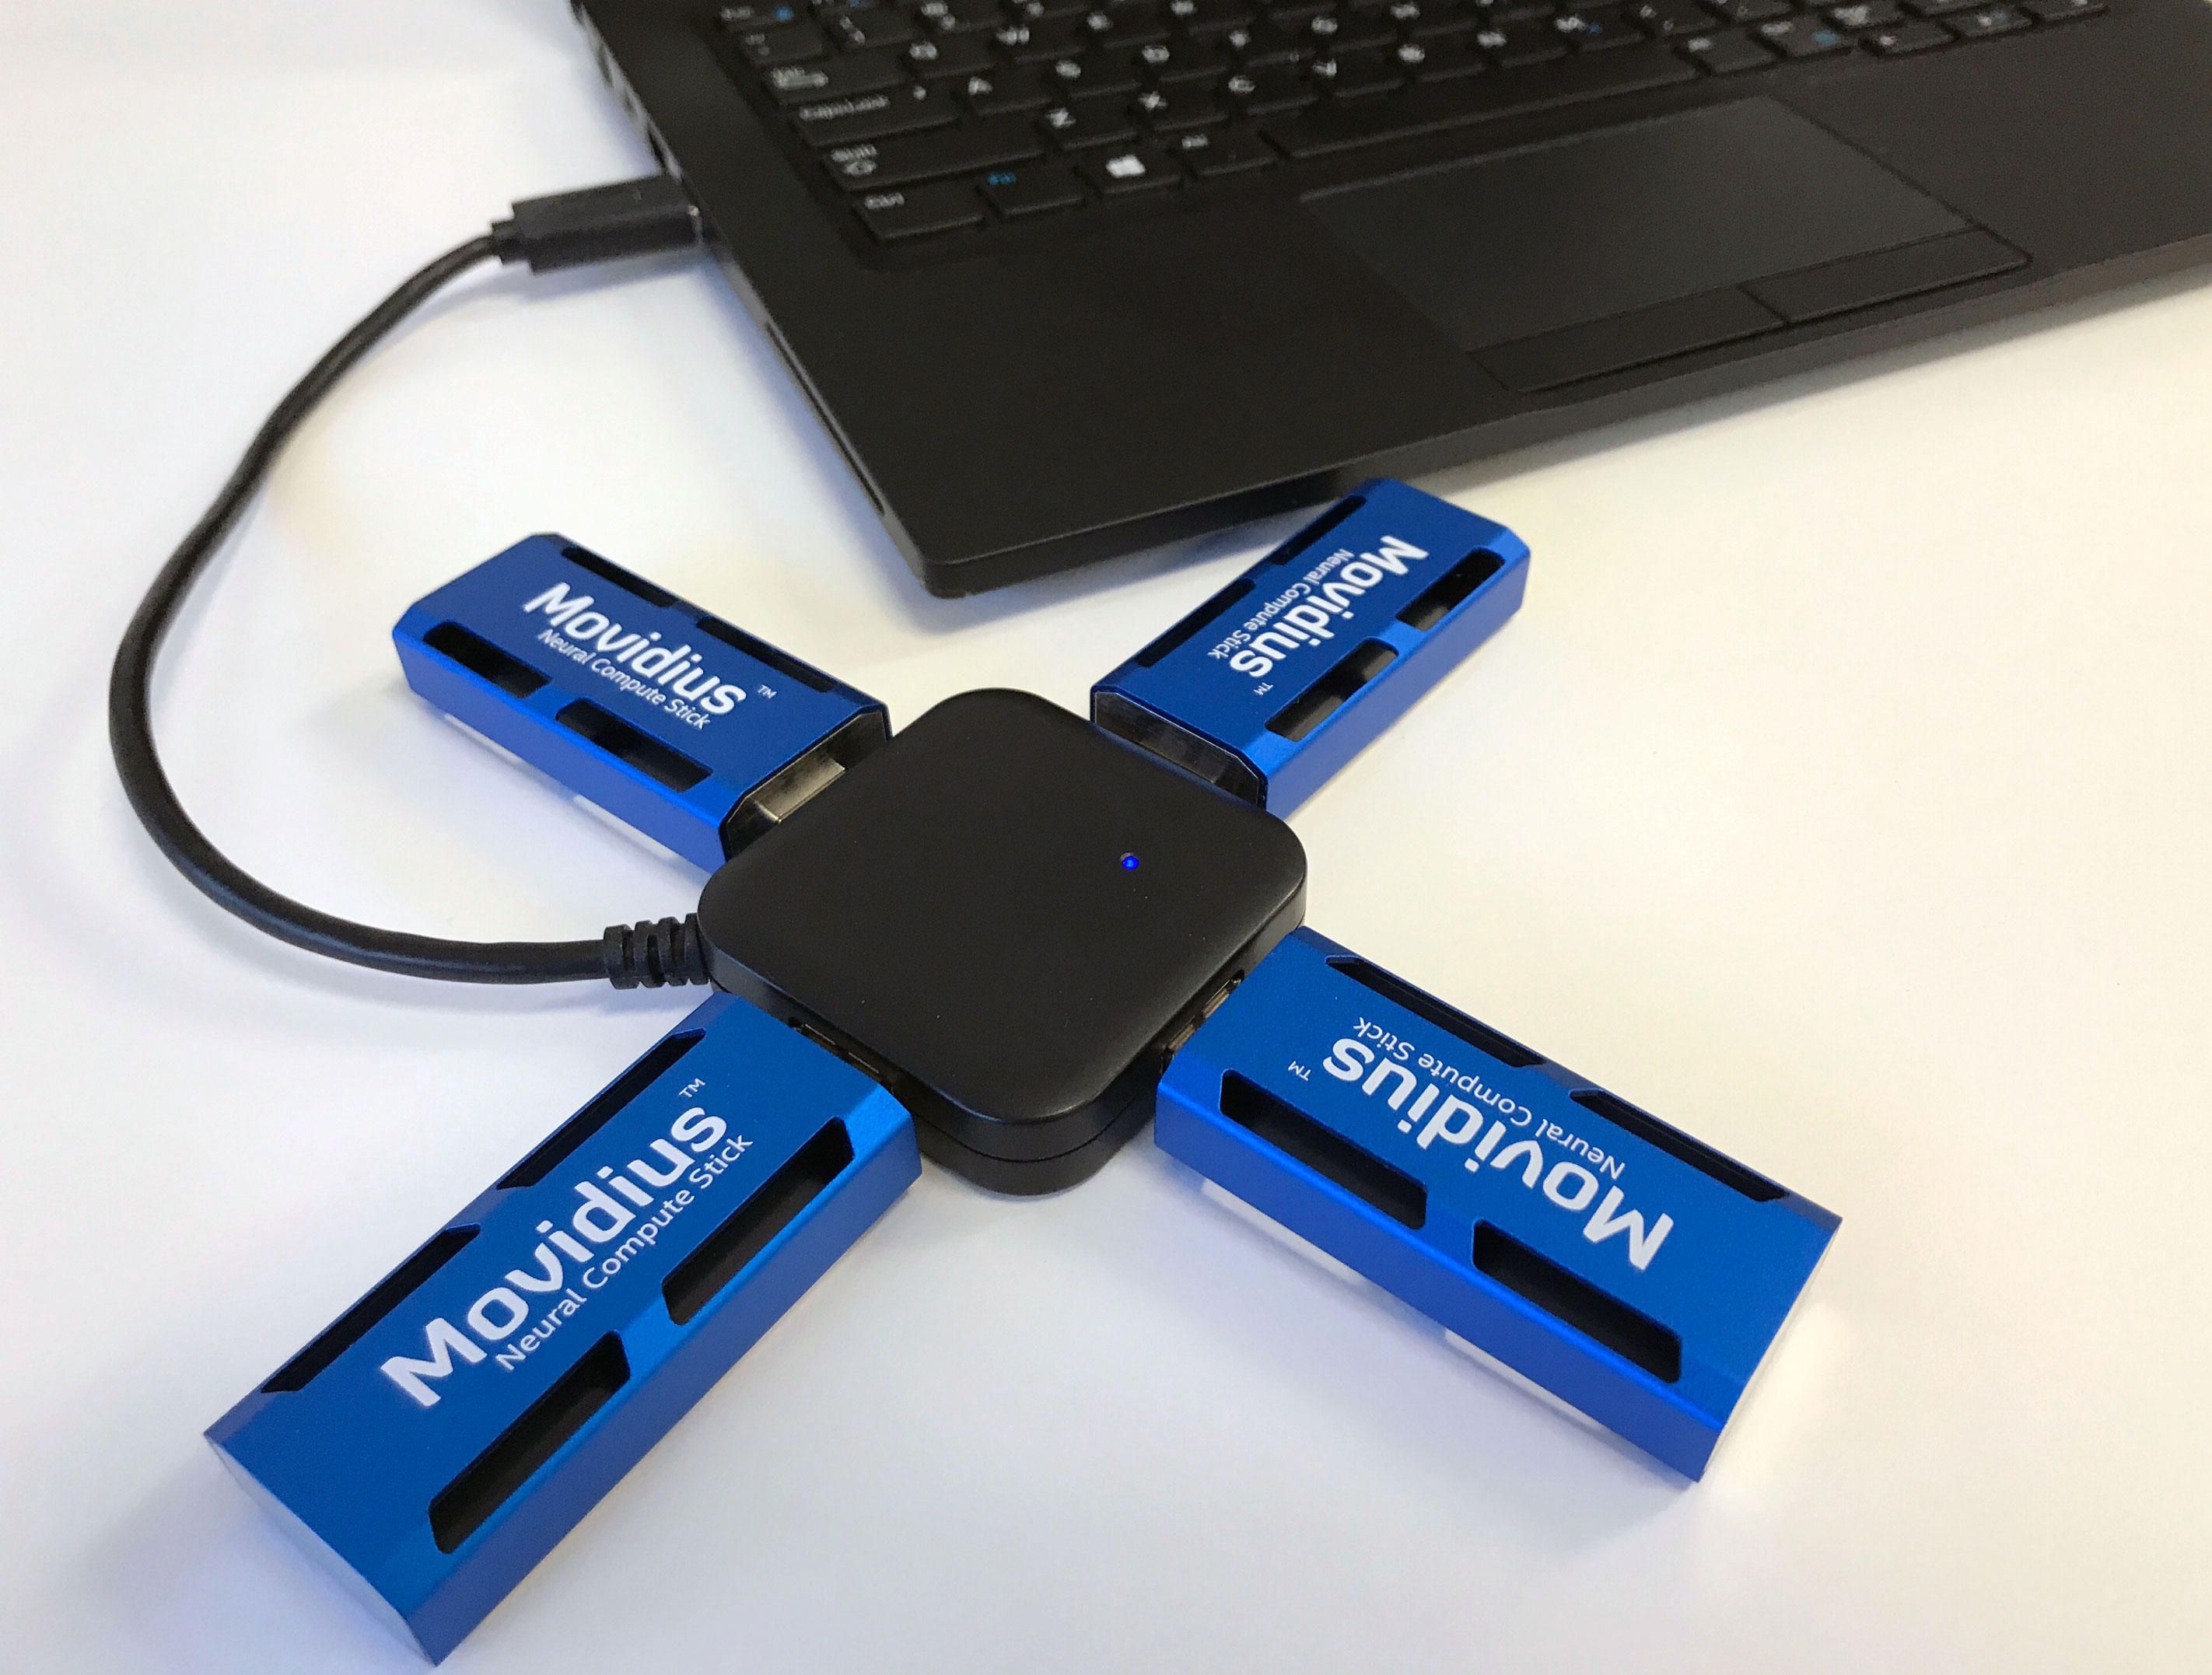 Intel Movidius Neural Compute Stick brings AI brains to USB port - CNET